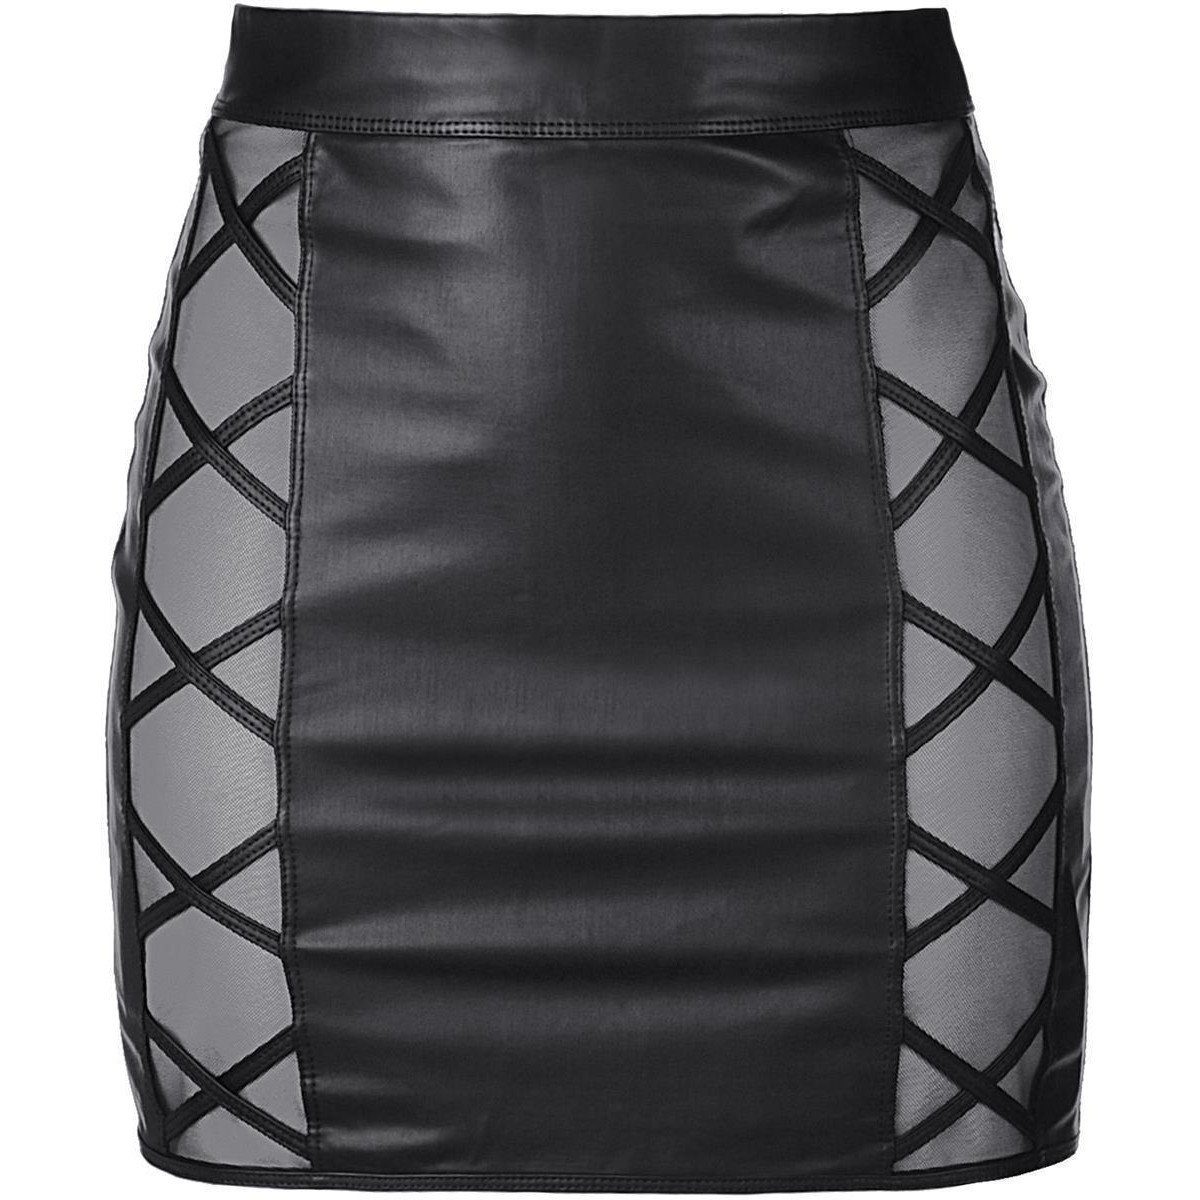 Axami Midirock V-9329 skirt - (L,M,S,XL) black